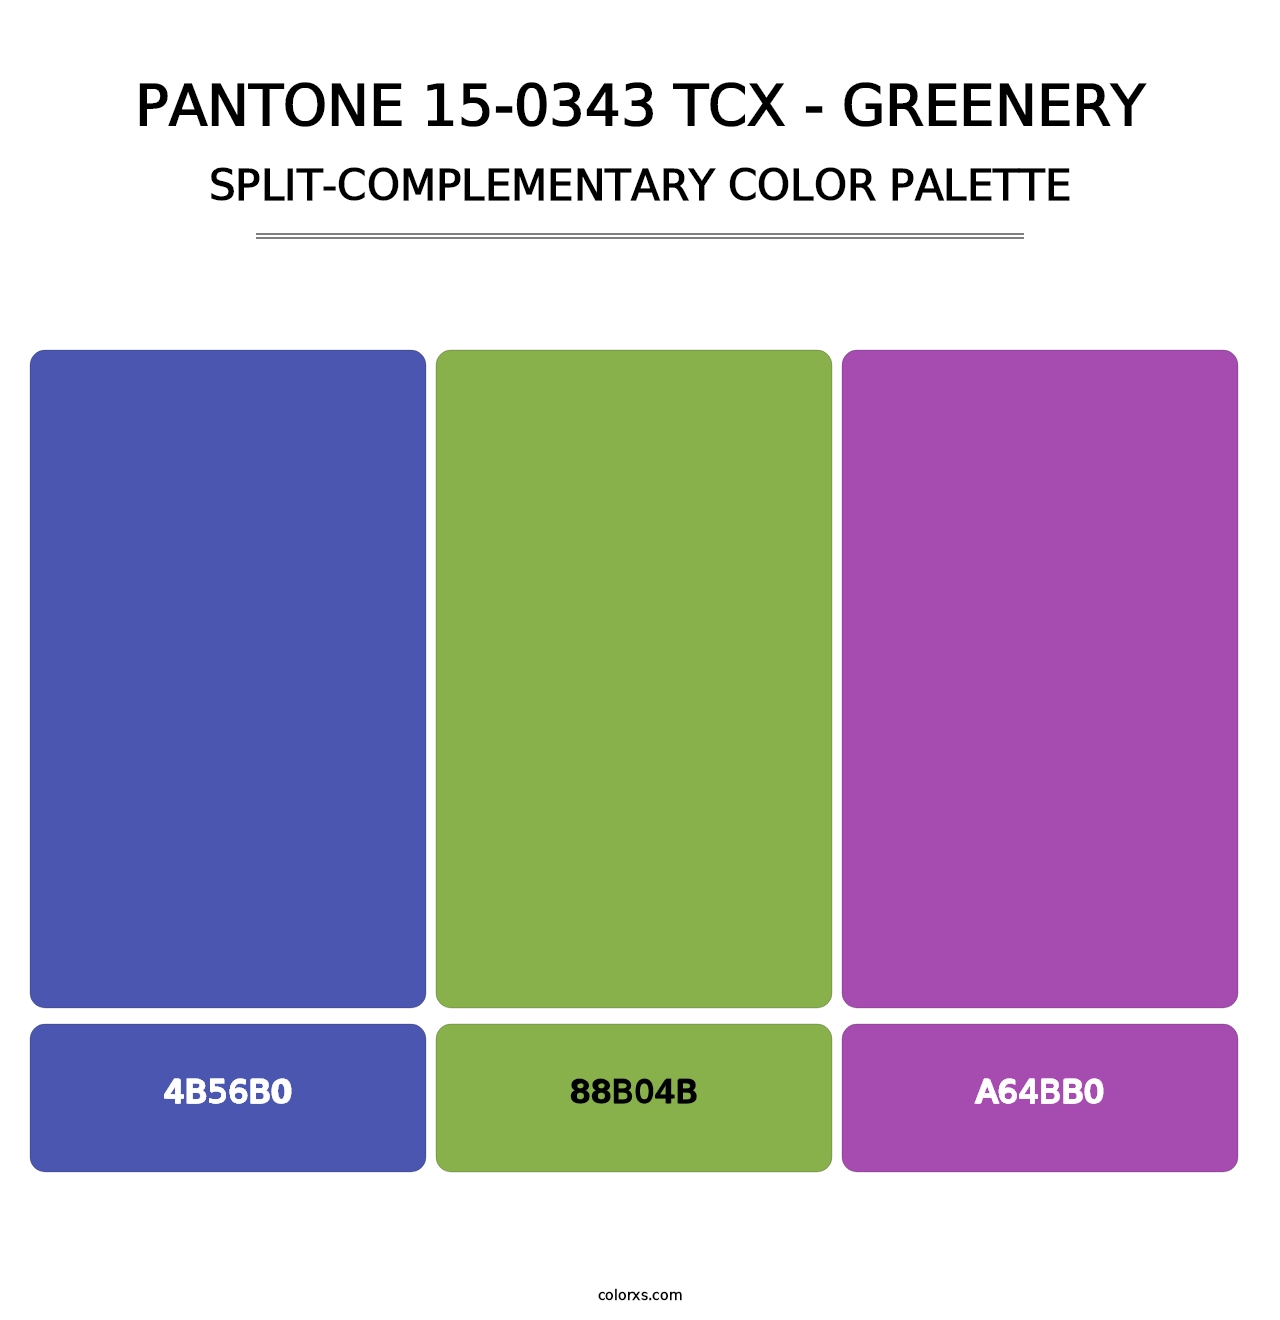 PANTONE 15-0343 TCX - Greenery - Split-Complementary Color Palette